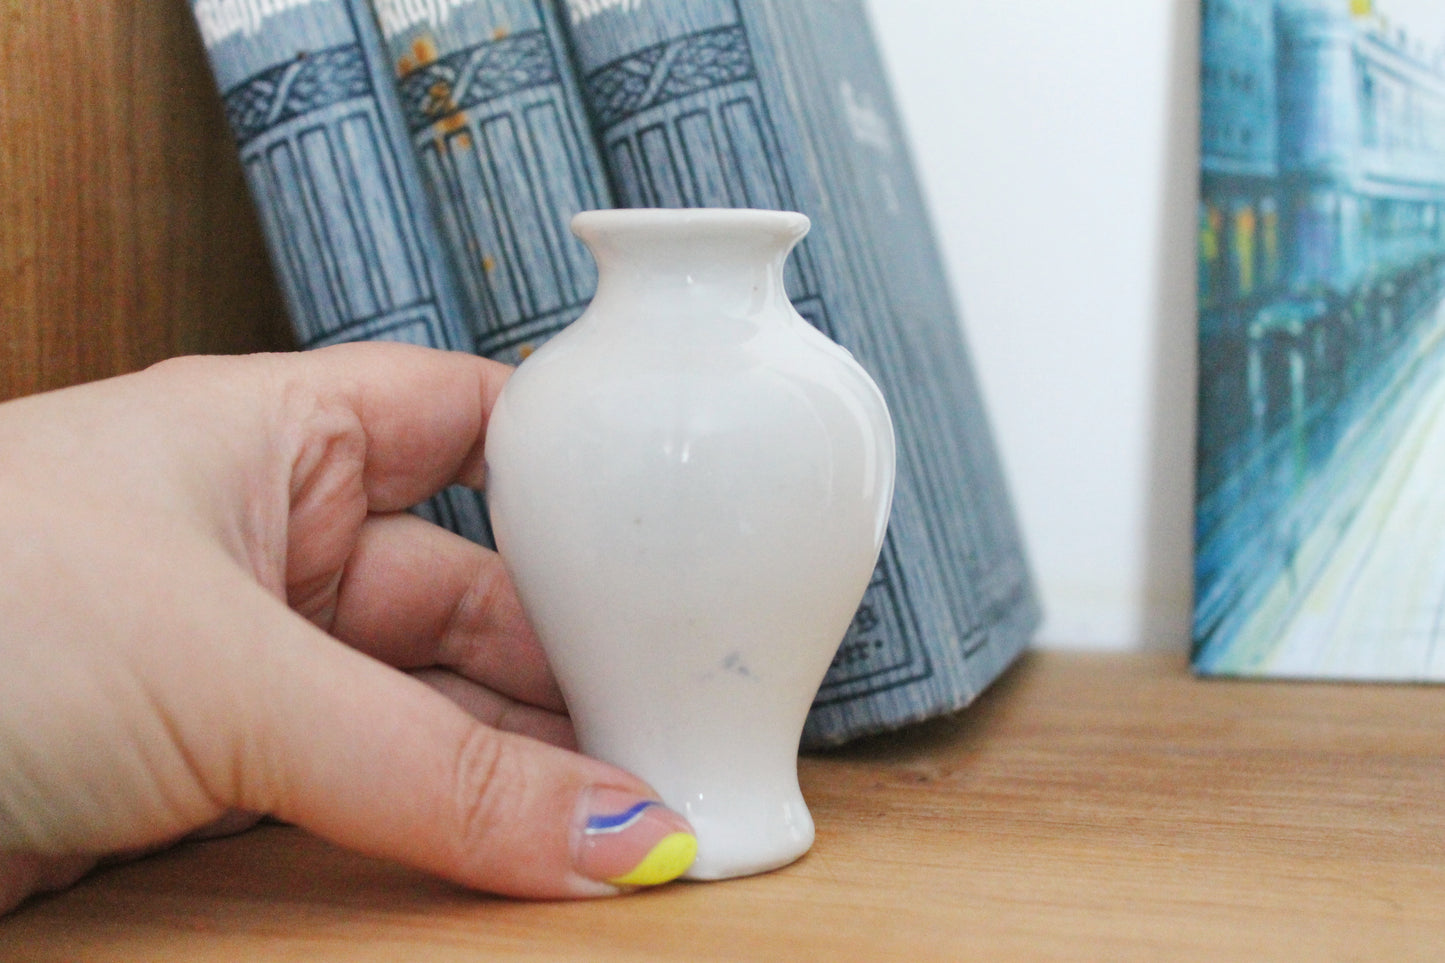 Vintage porcelain small vase 3.4 inches - made in Germany  - mini vase - cute vintage mini vase - 1960-1970s